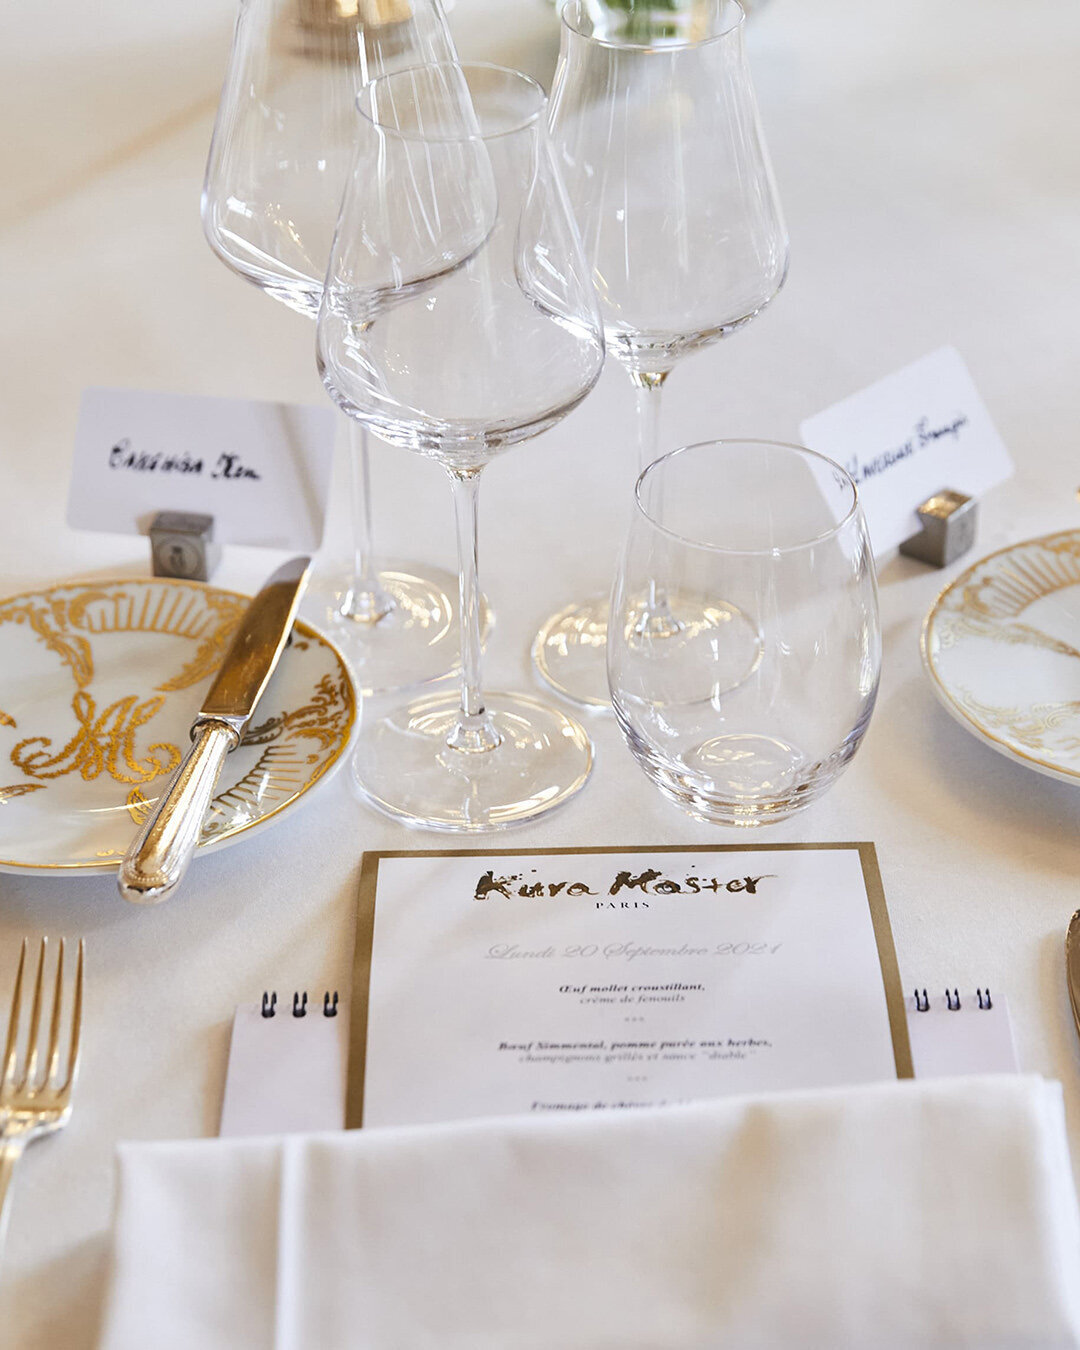 Best Corporate Event Planner in Paris - Business Luncheon Hotel de Crillon 5